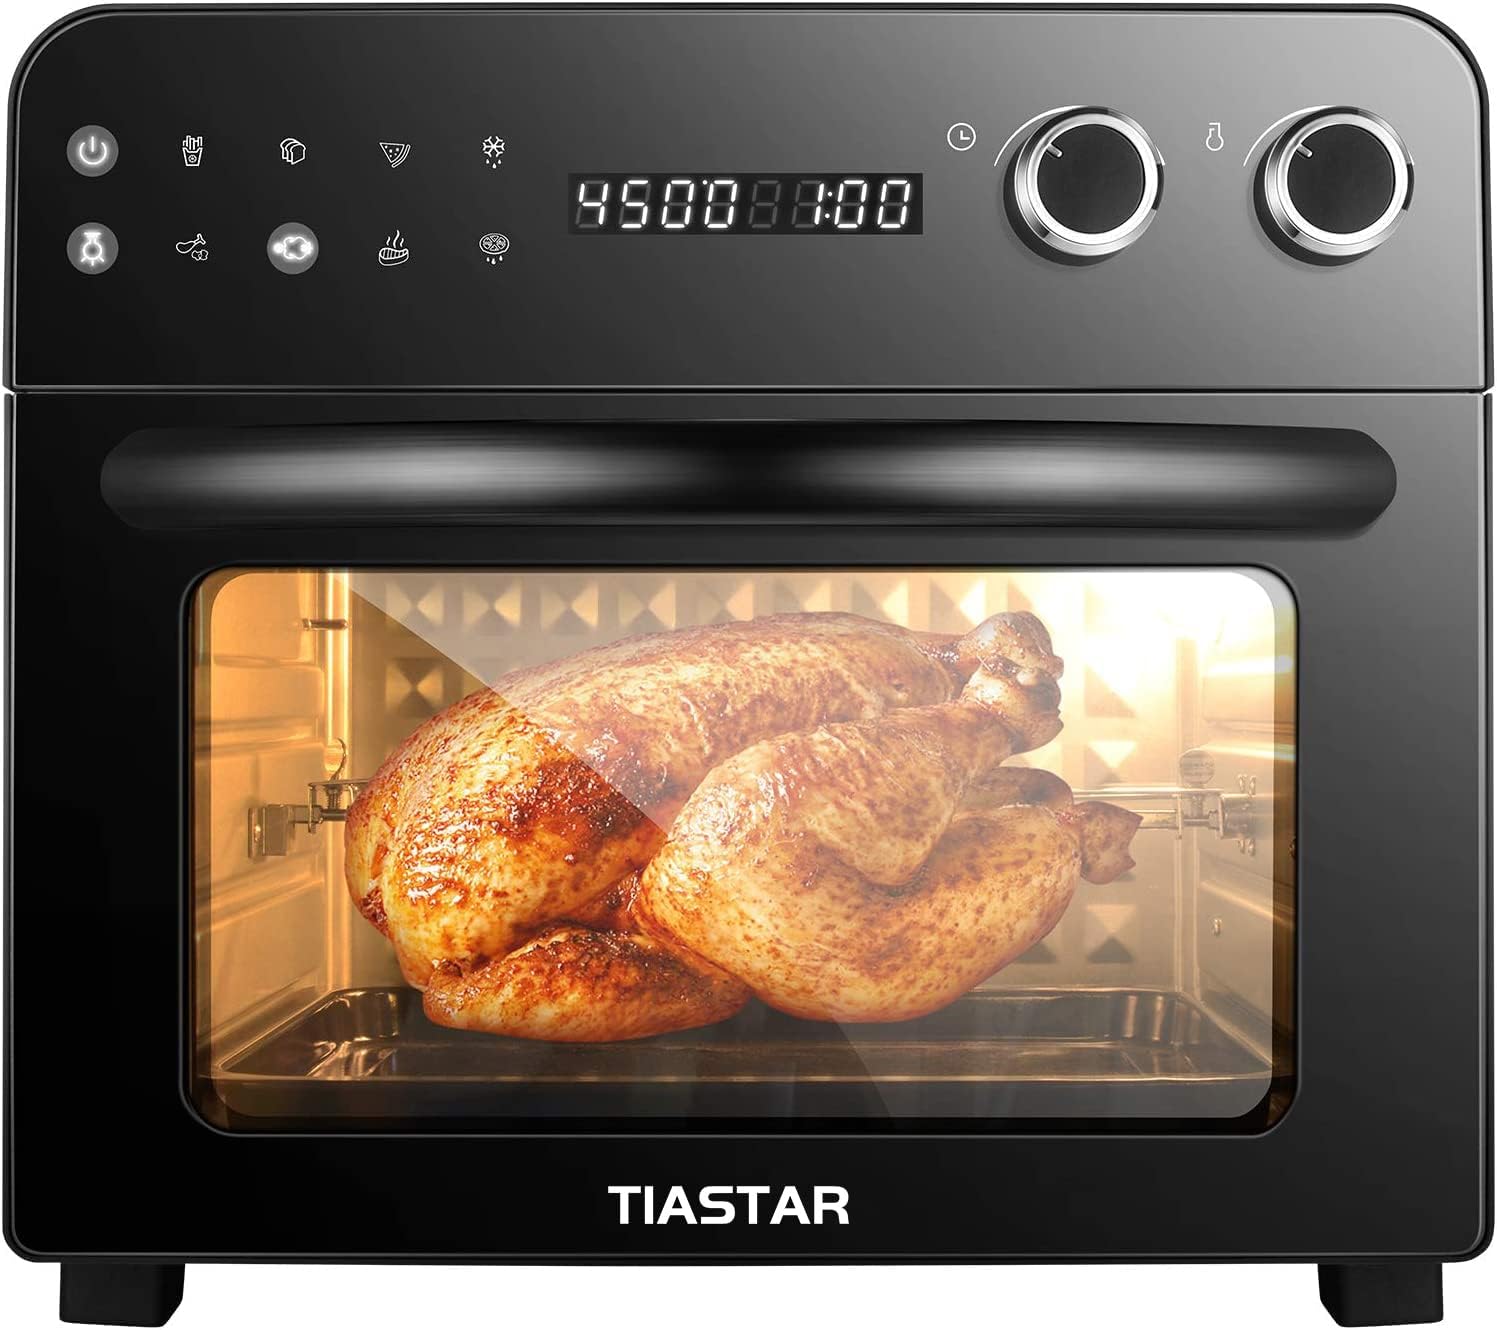 Tiastar Digital Air Fryer Oven Review